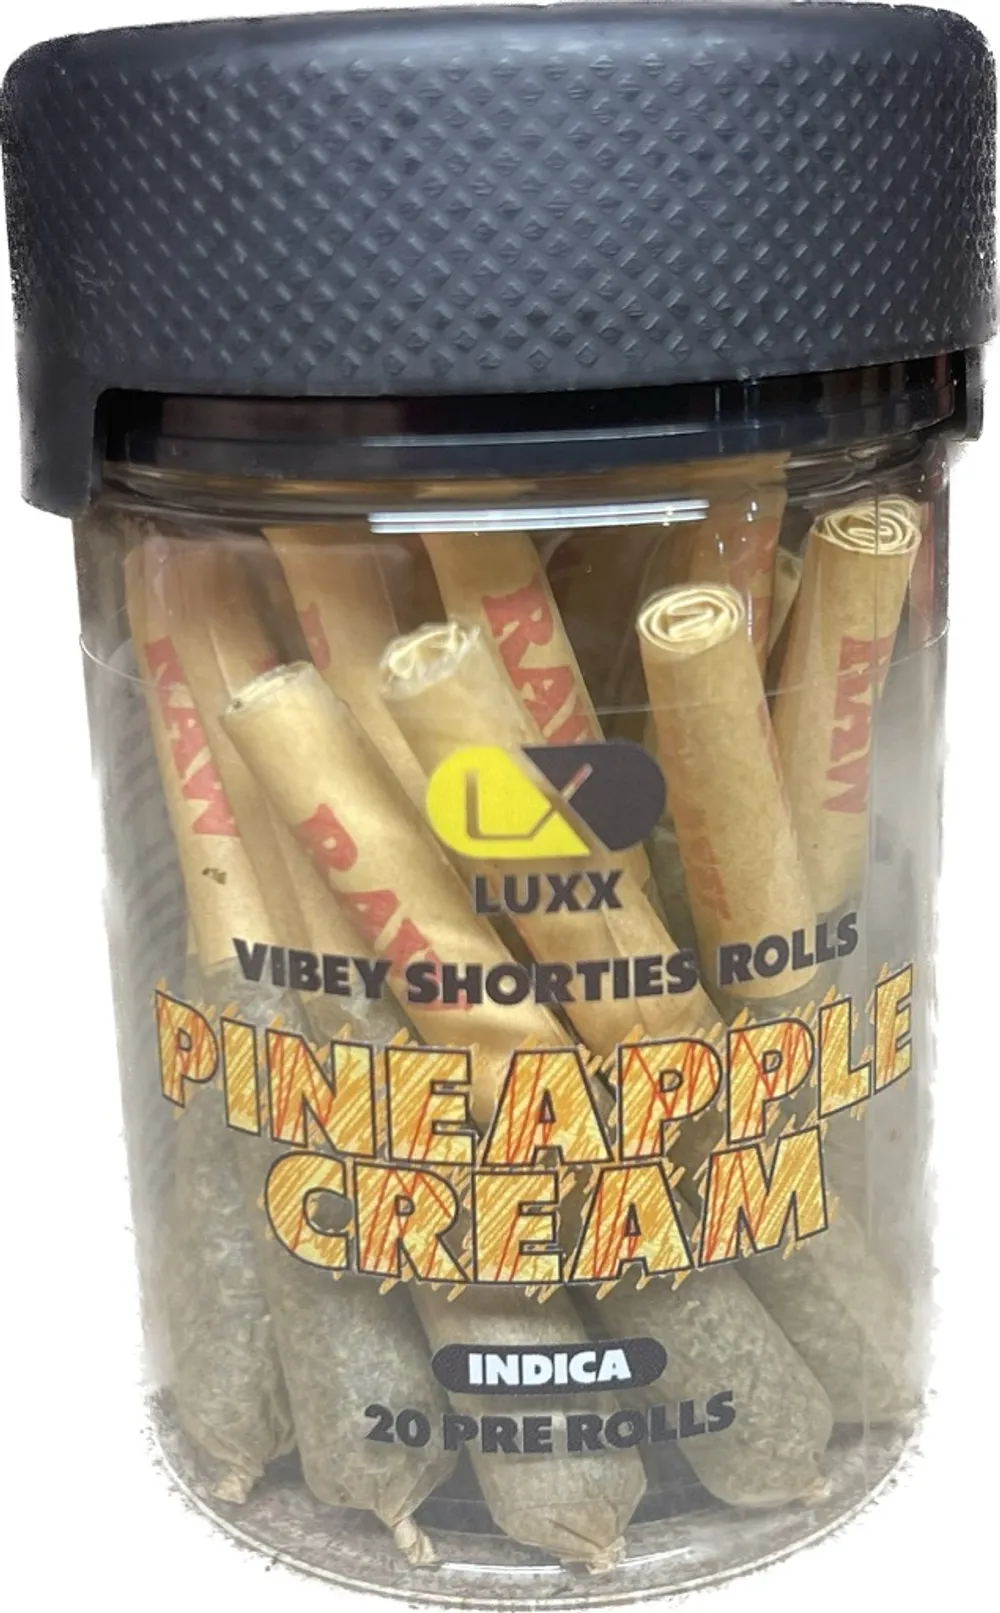 Luxx Vibey Shorties Rolls Pineapple Cream 20ct